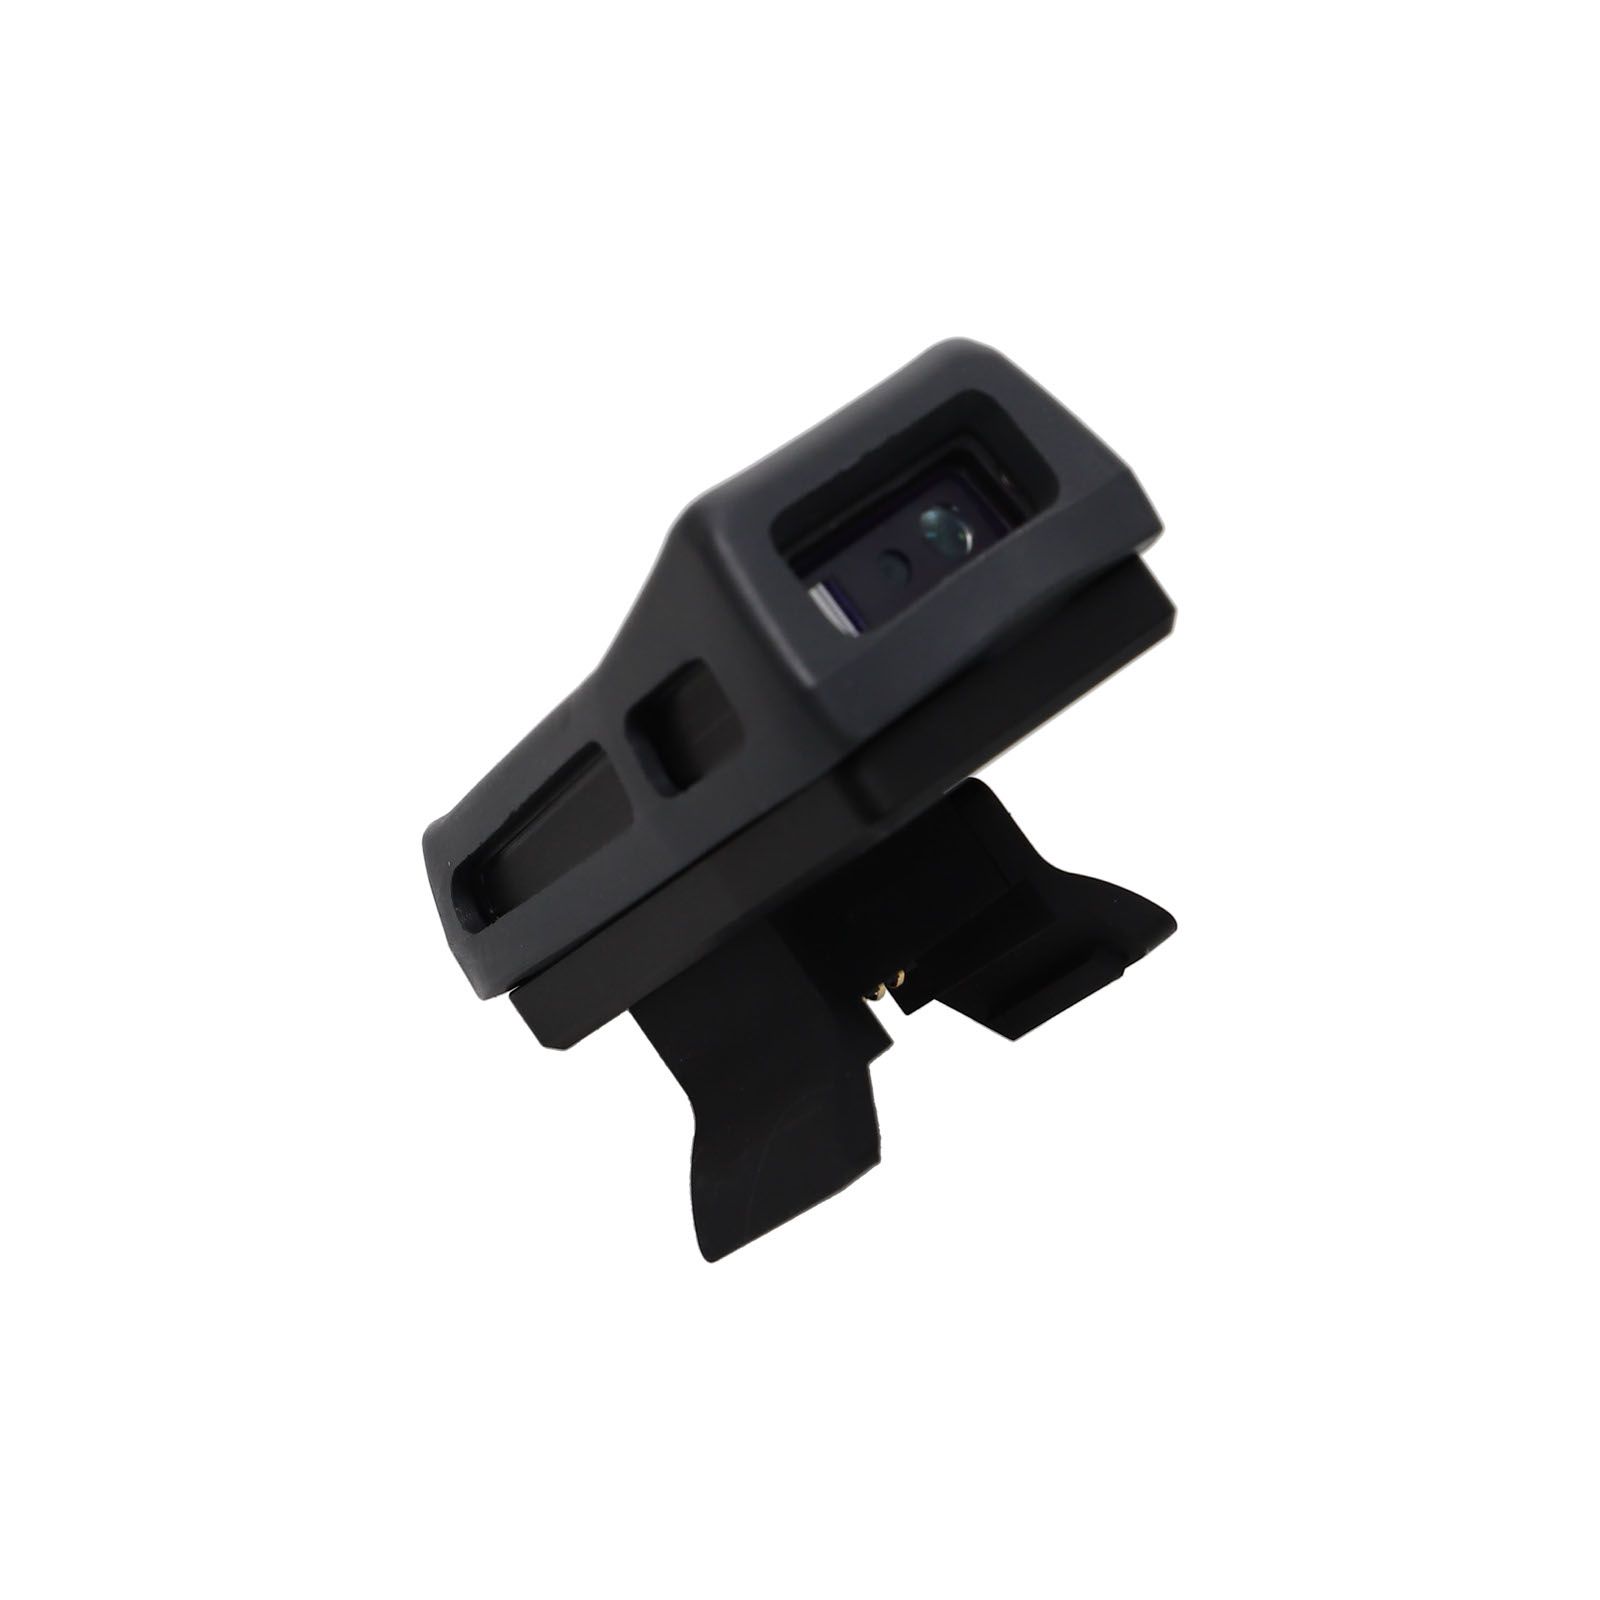 2D Scanner ETP STR61 productfoto